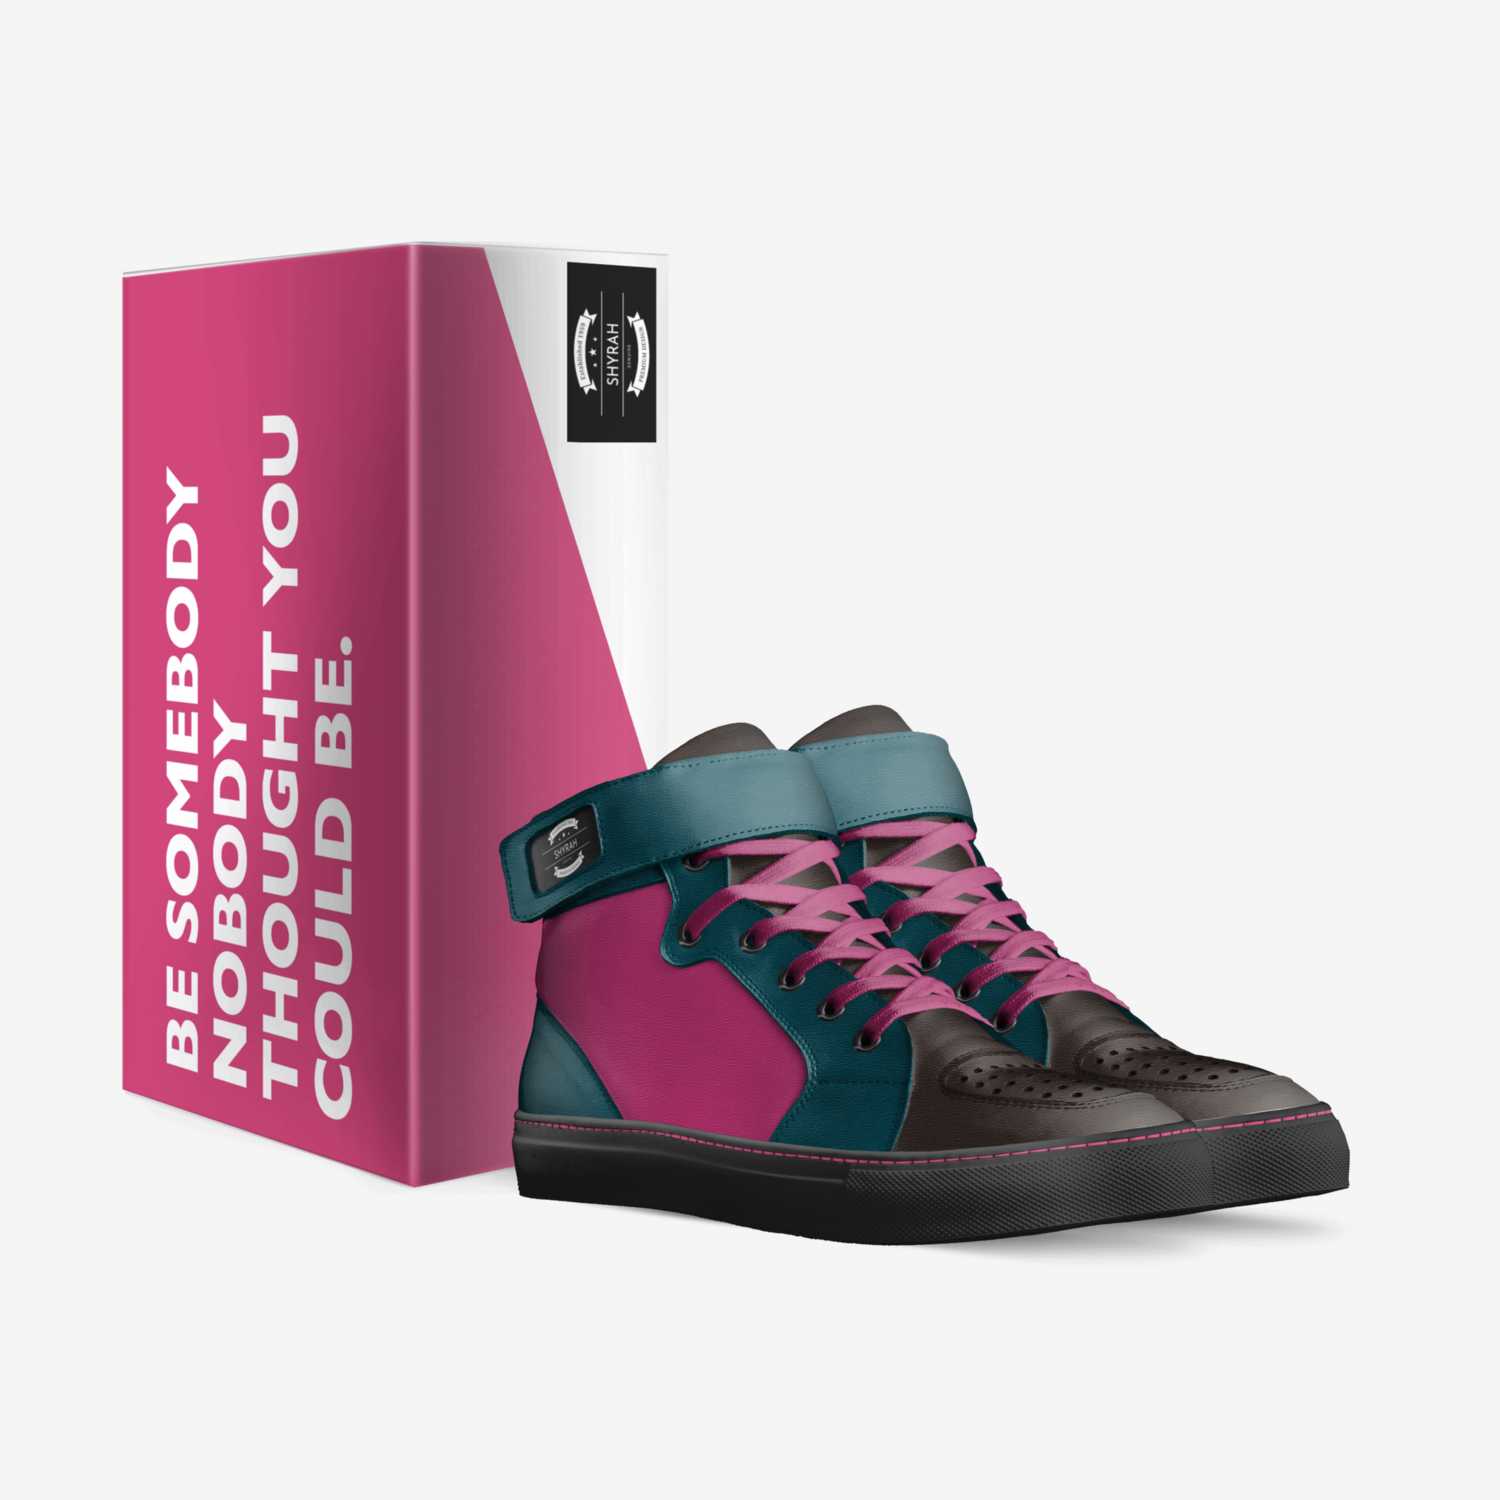 Runemup custom made in Italy shoes by Lashauna Dye | Box view